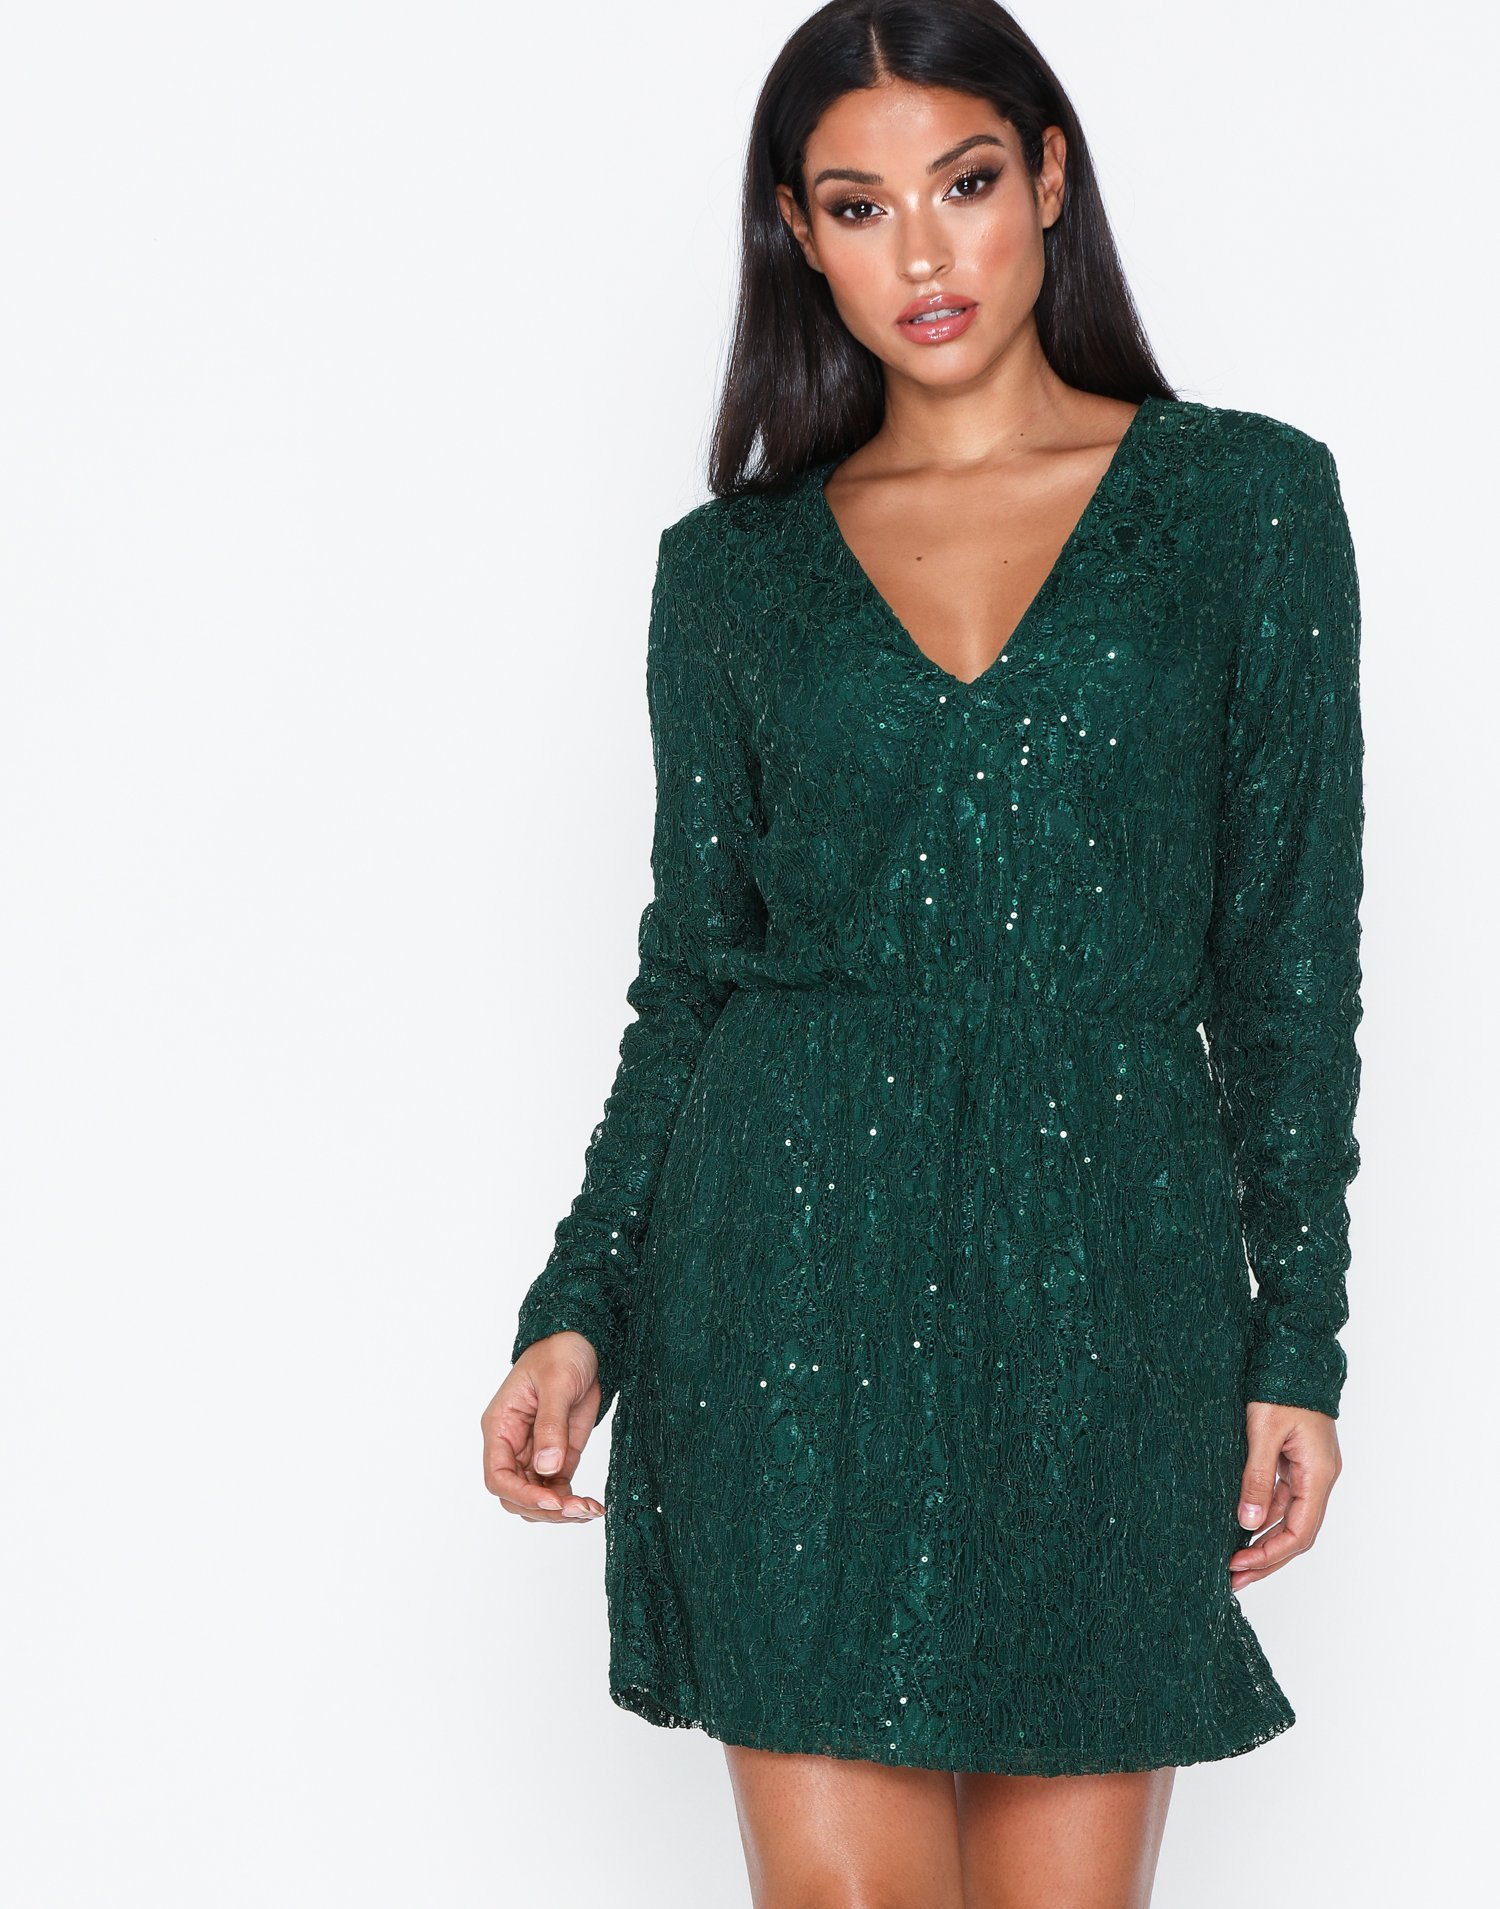 green sparkly dress